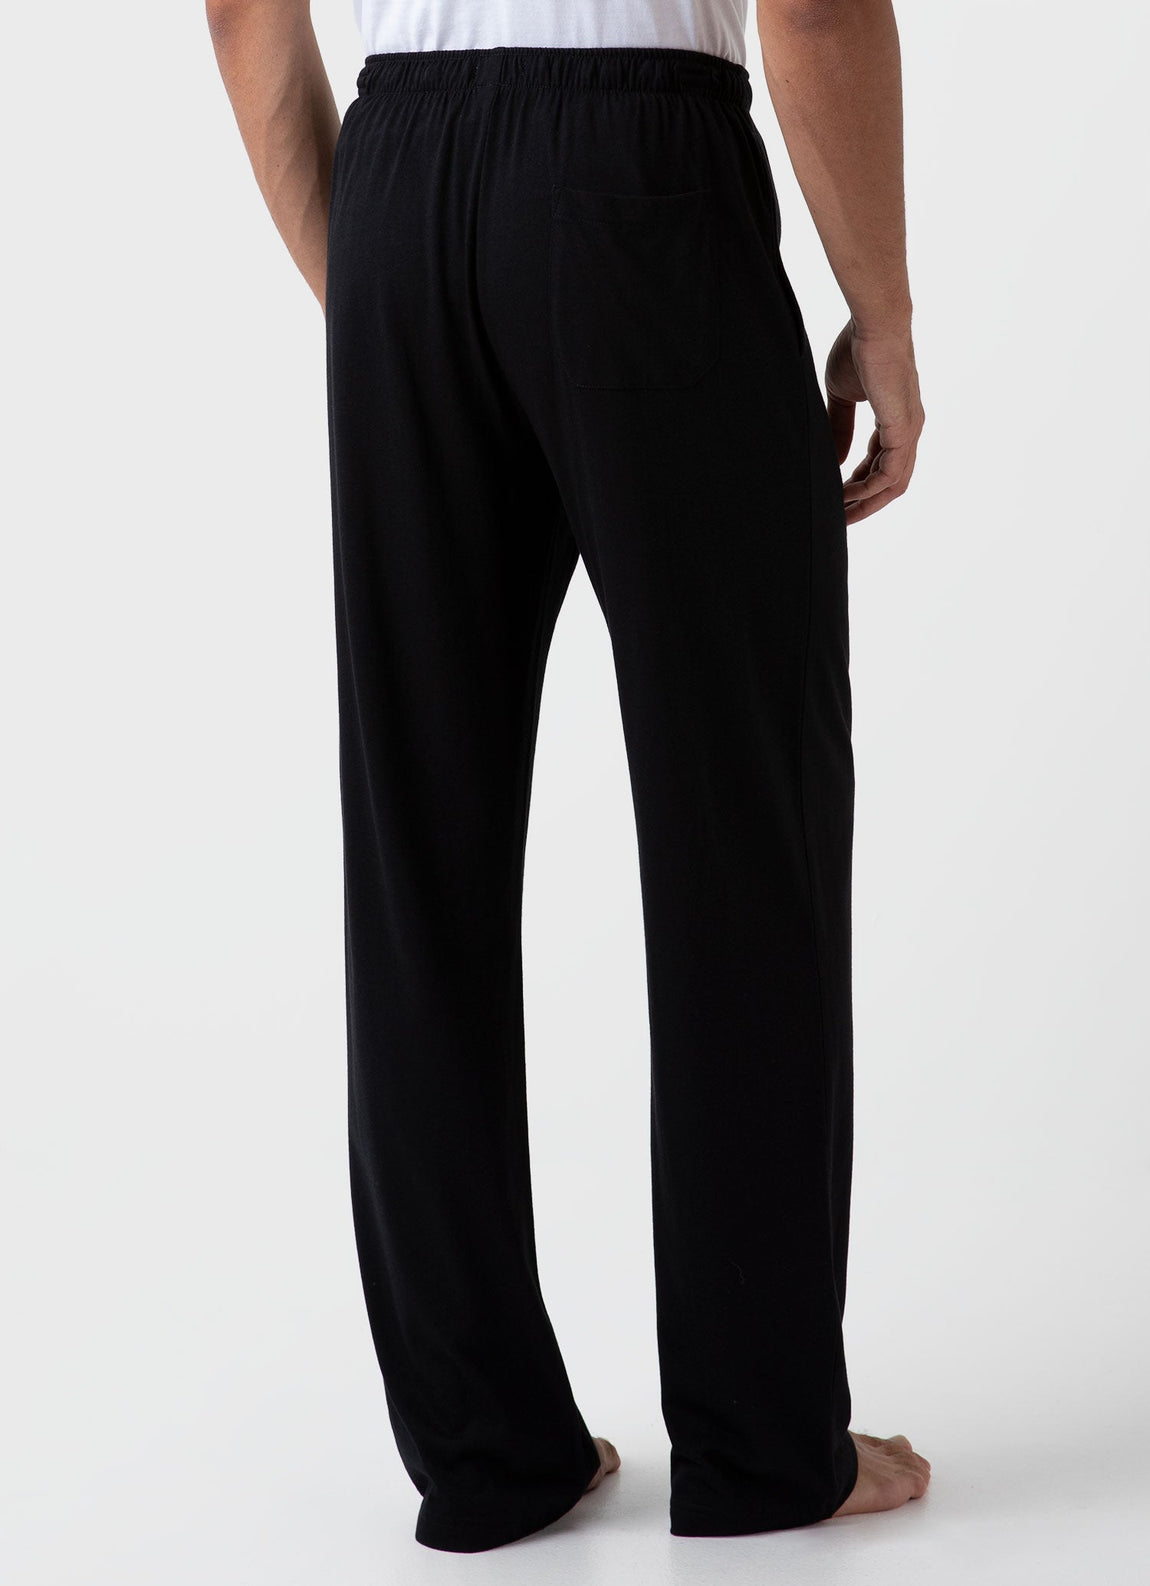 Men's Cotton Modal Lounge Pant in Black